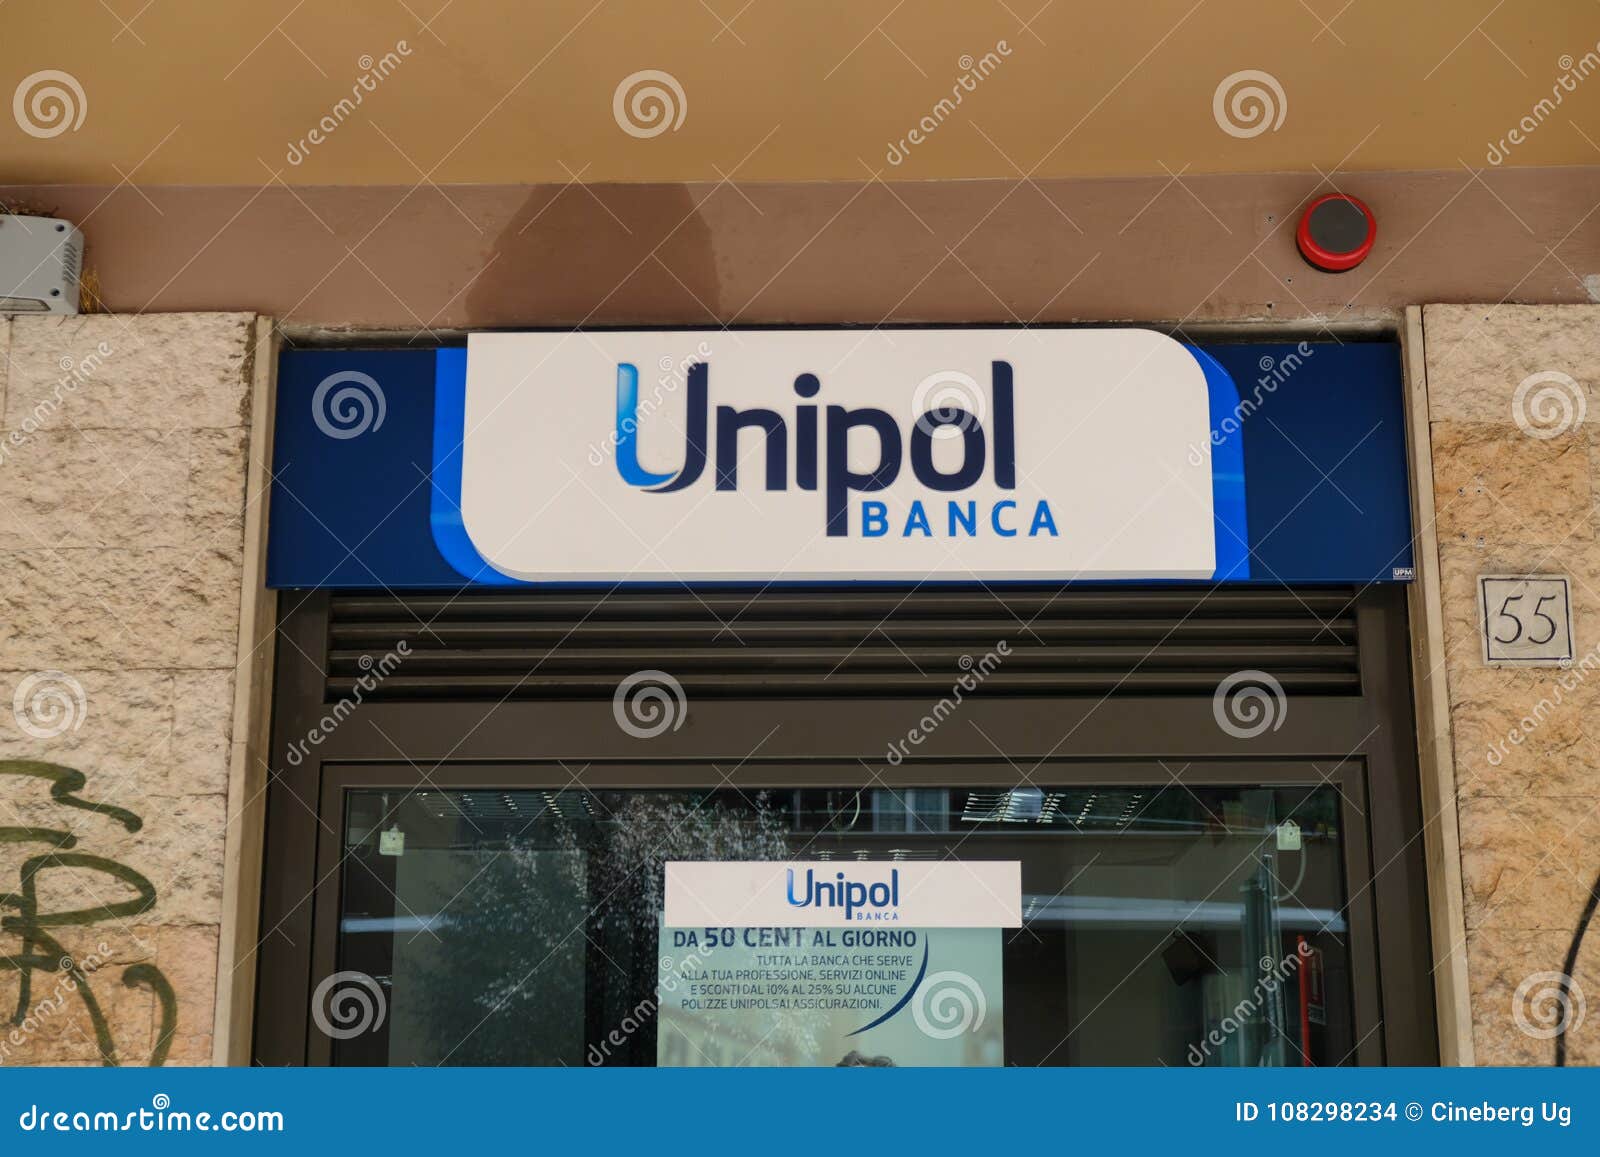 Unipol bank branch editorial stock image. Image of banking - 108298234